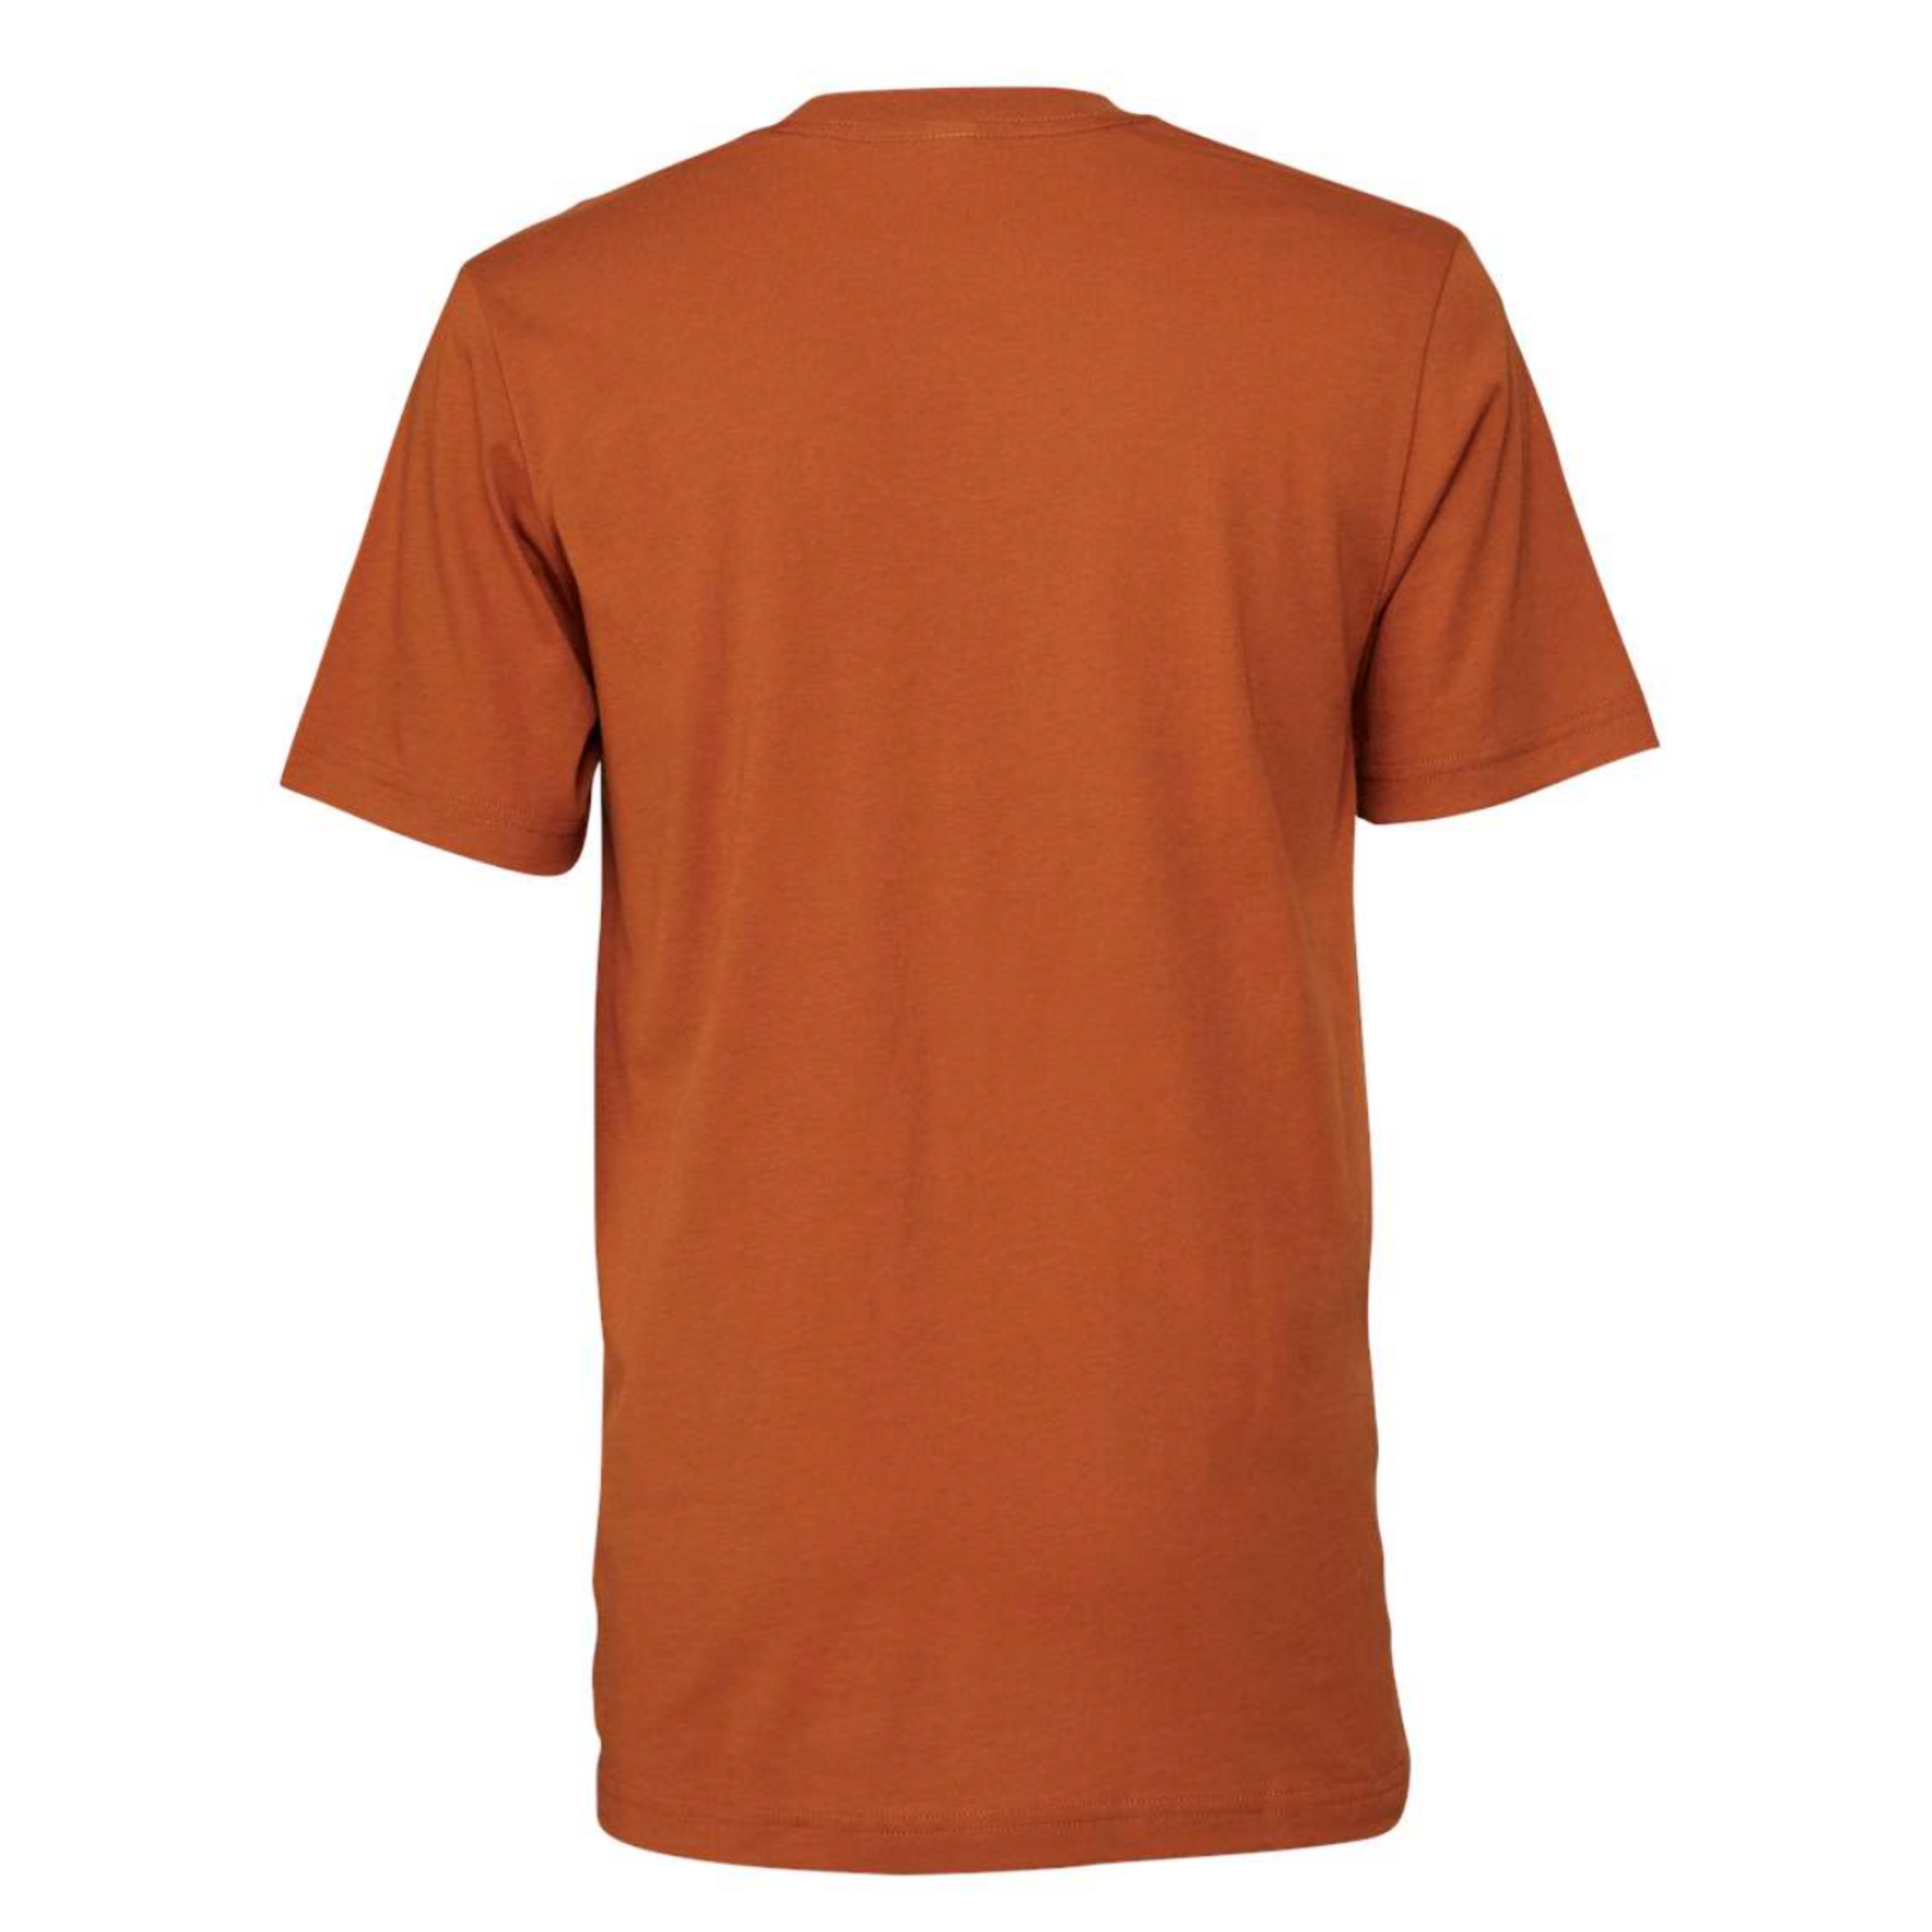 Lake It Easy T-Shirt in orange - back view